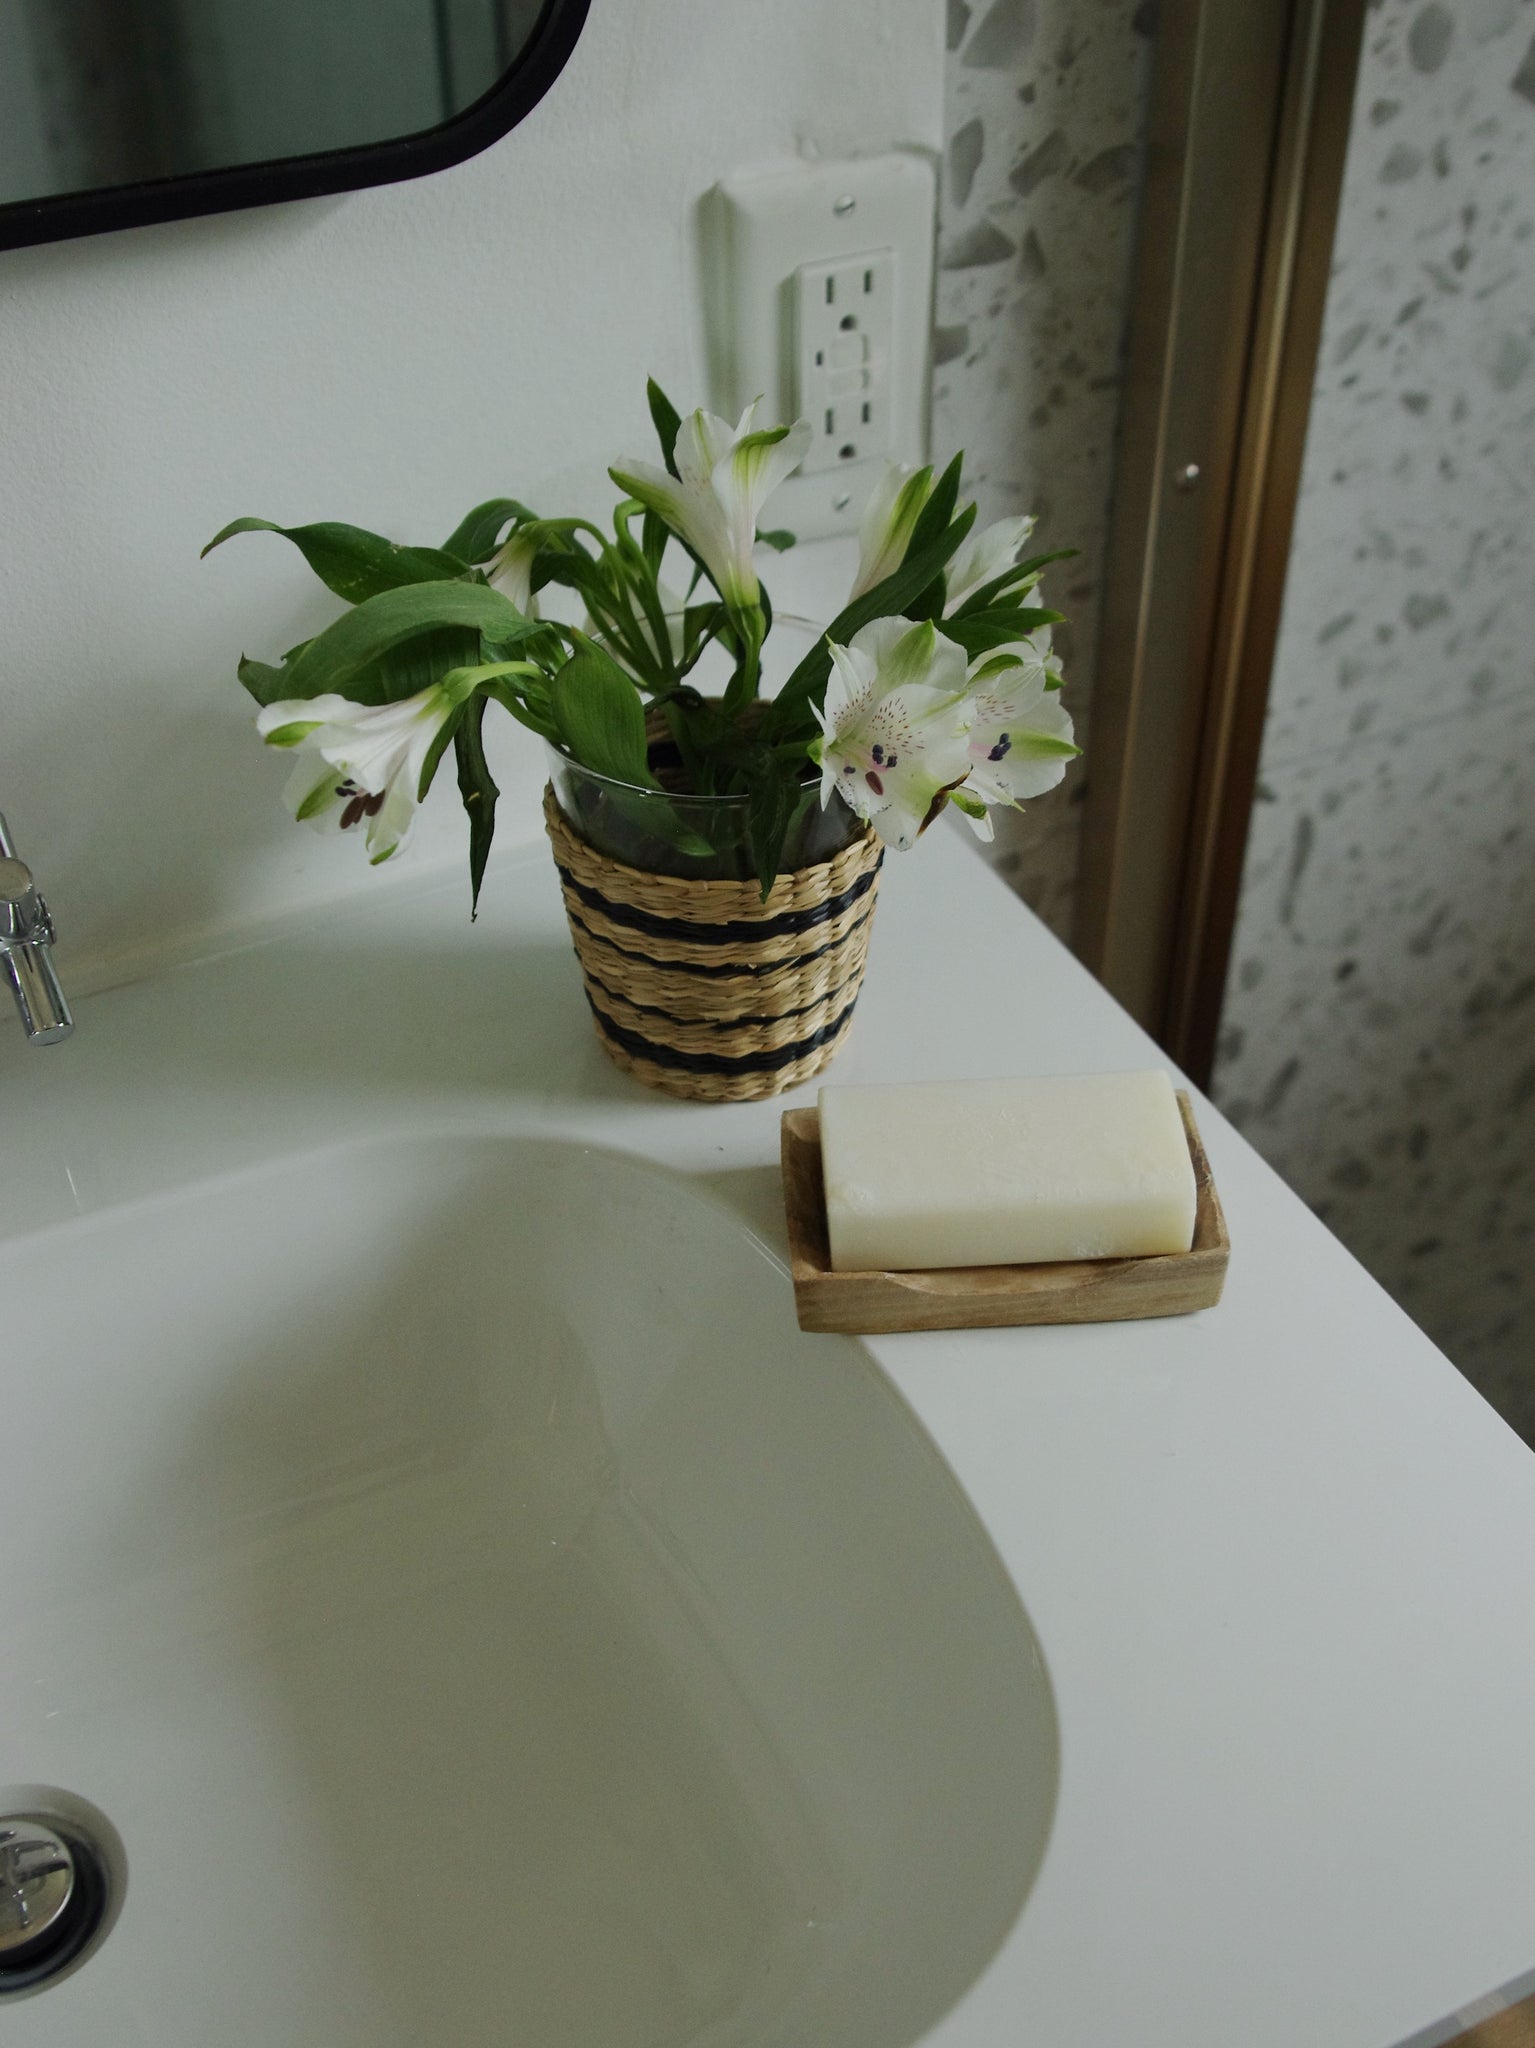 Le Bain Bathroom Accessories—Soap Dish